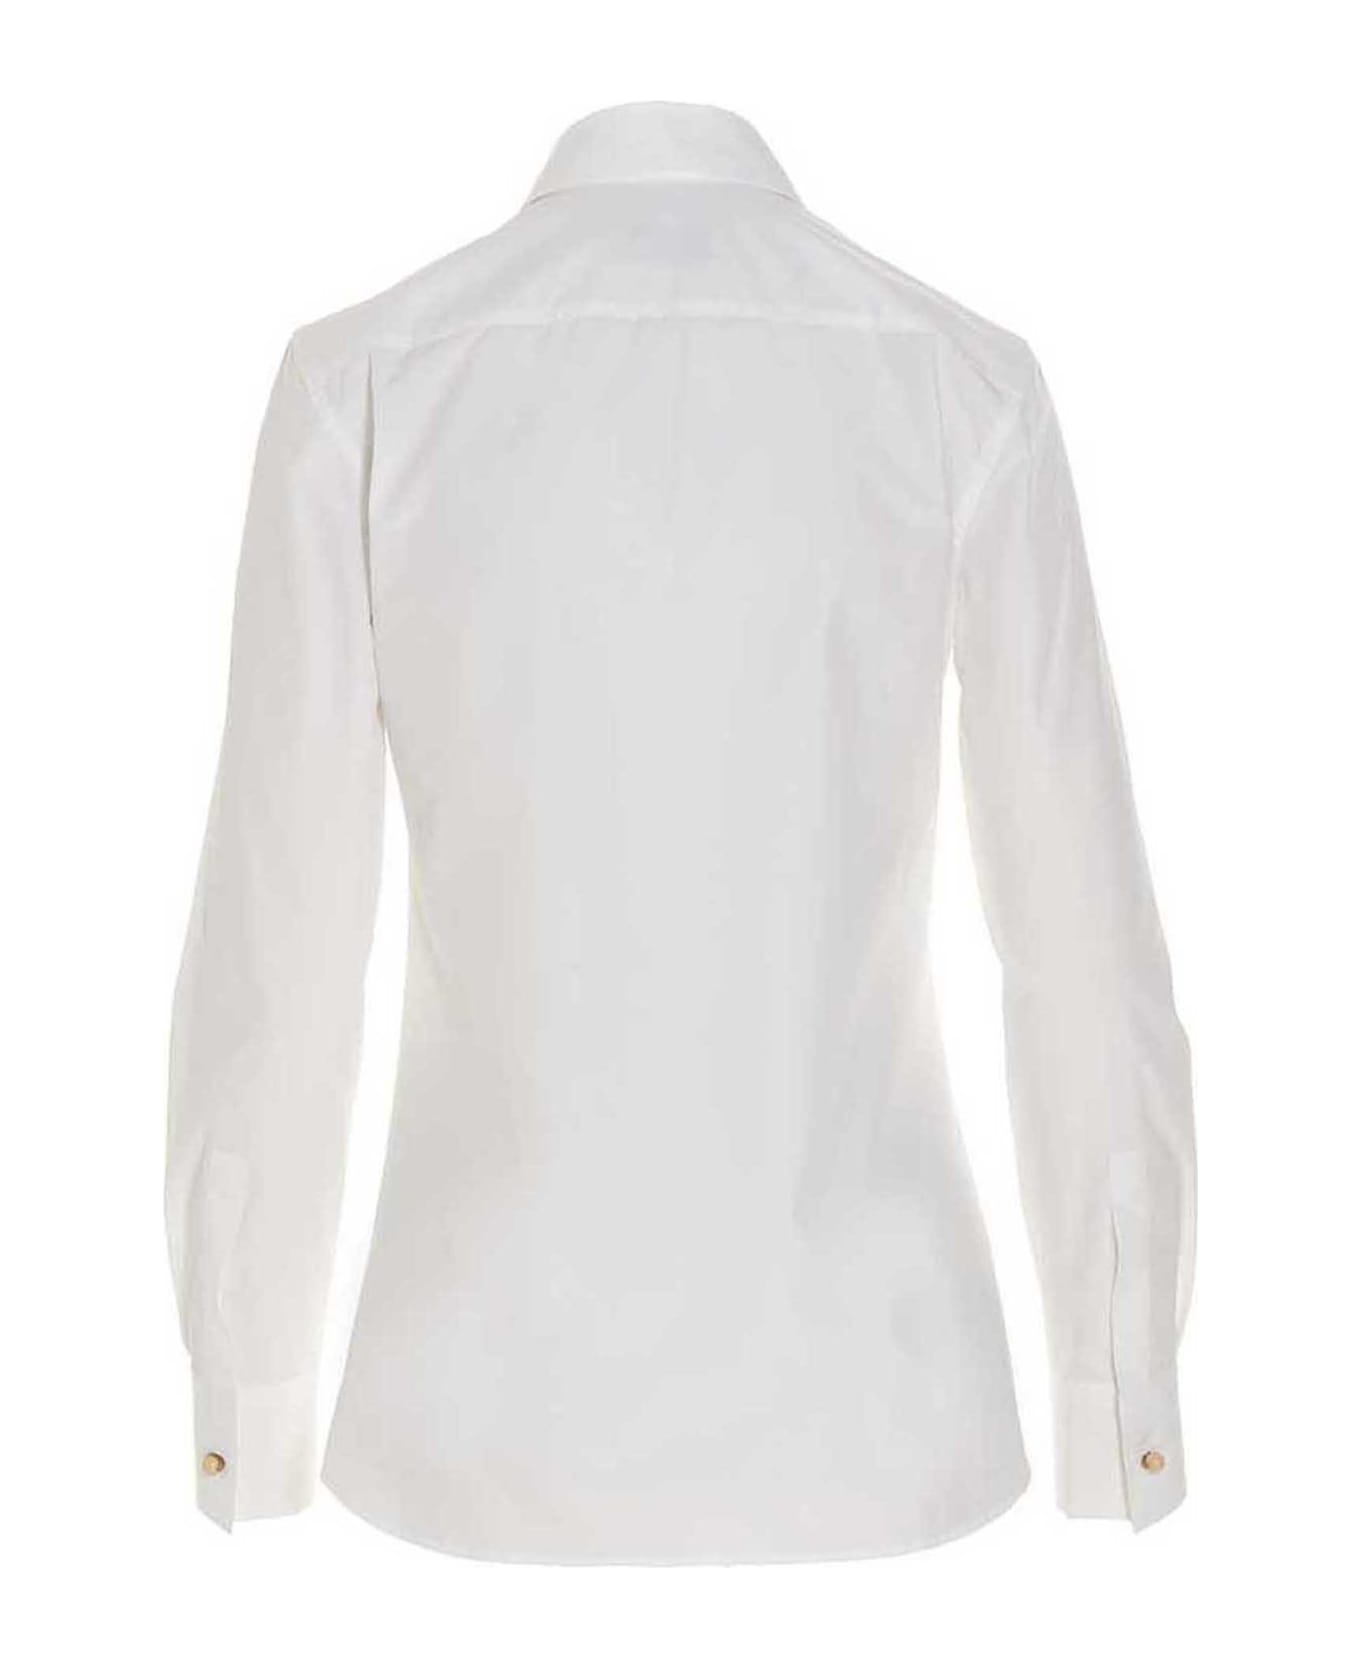 Lanvin 'ls' Shirt - Optic White